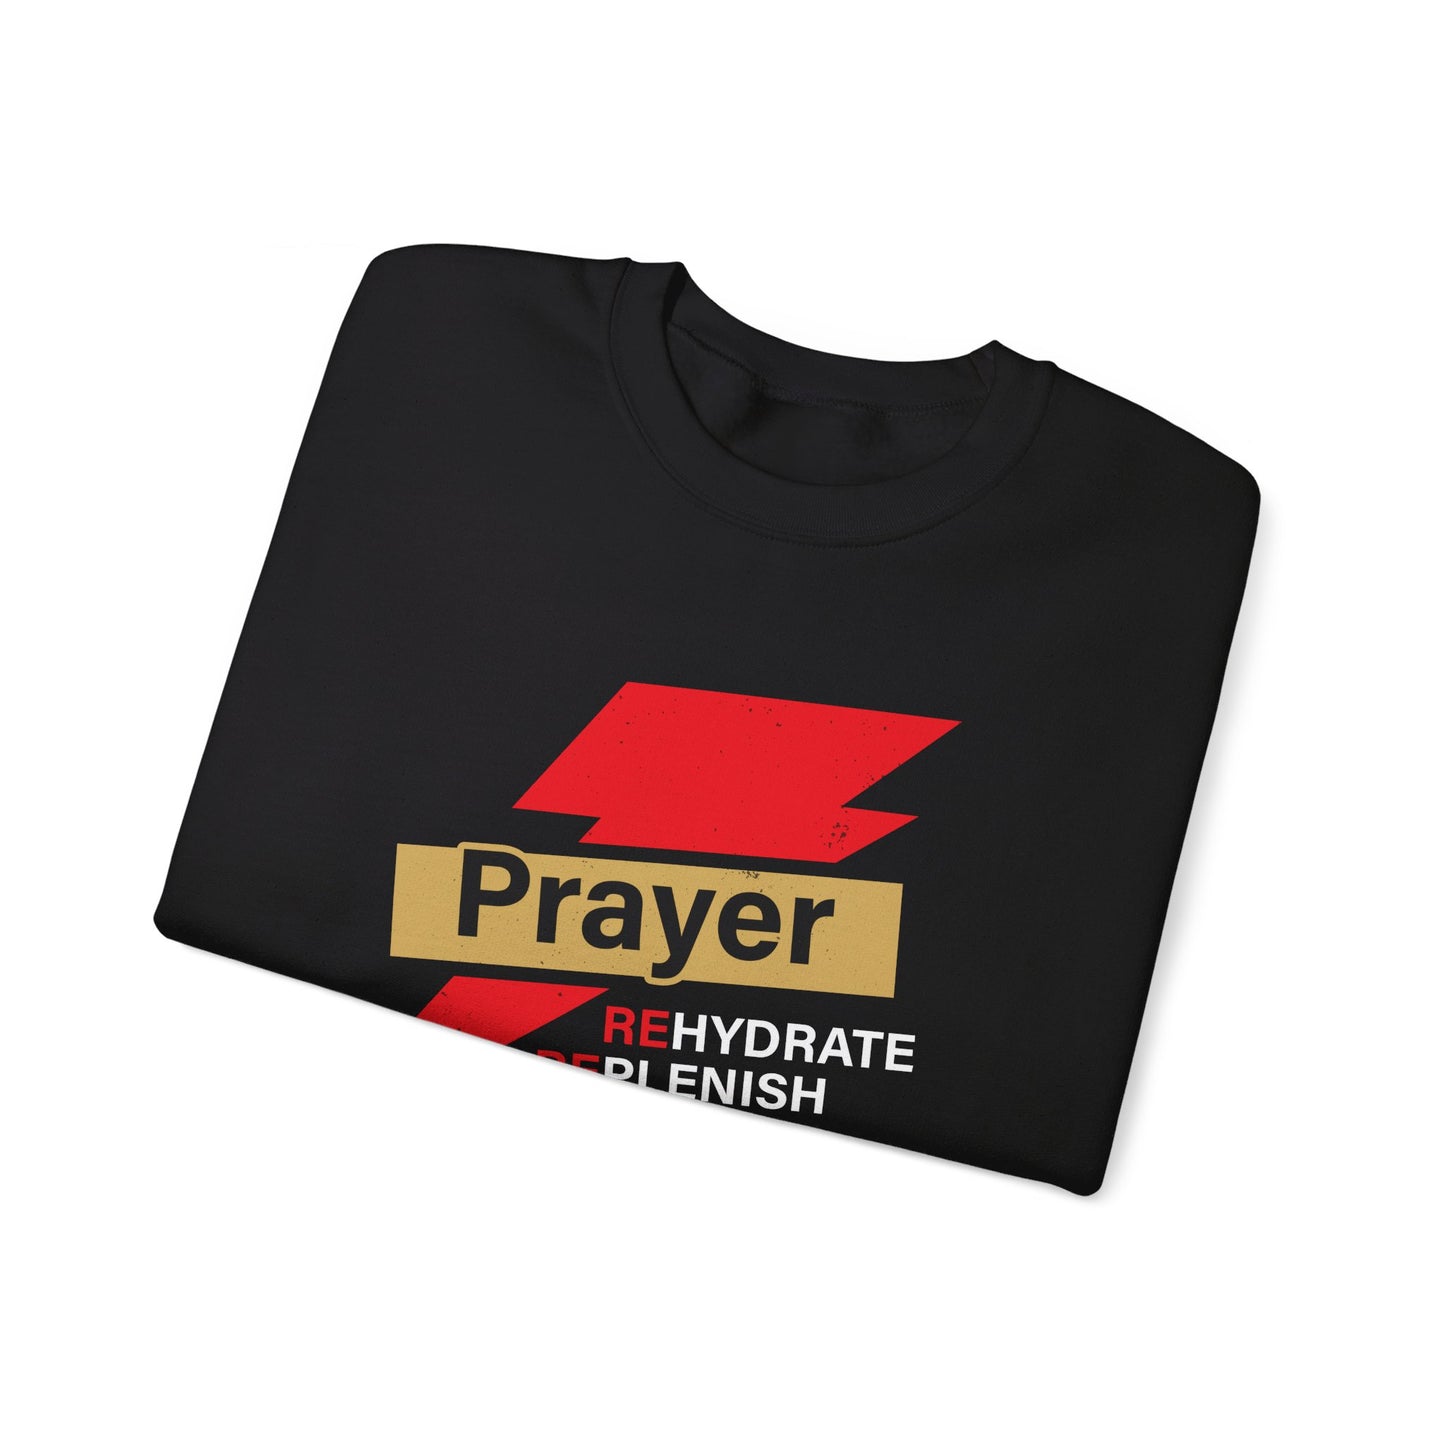 Prayer Rehydrate Replenish Refuel Unisex Heavy Blend™ Crewneck Christian Sweatshirt